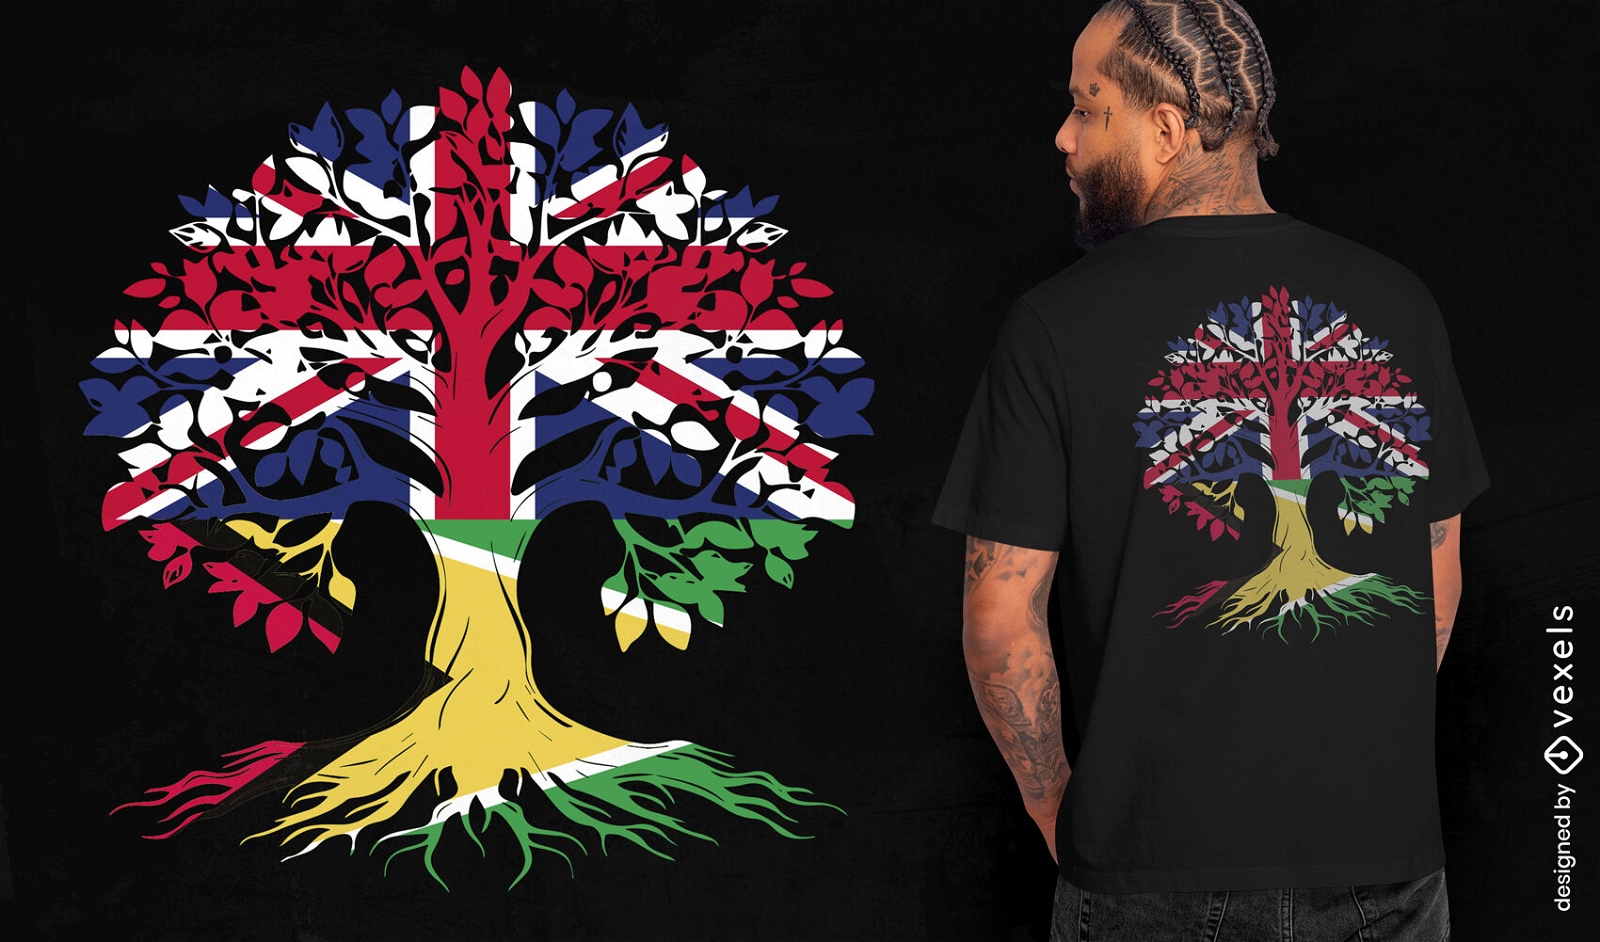 REQUEST UK tree t-shirt design